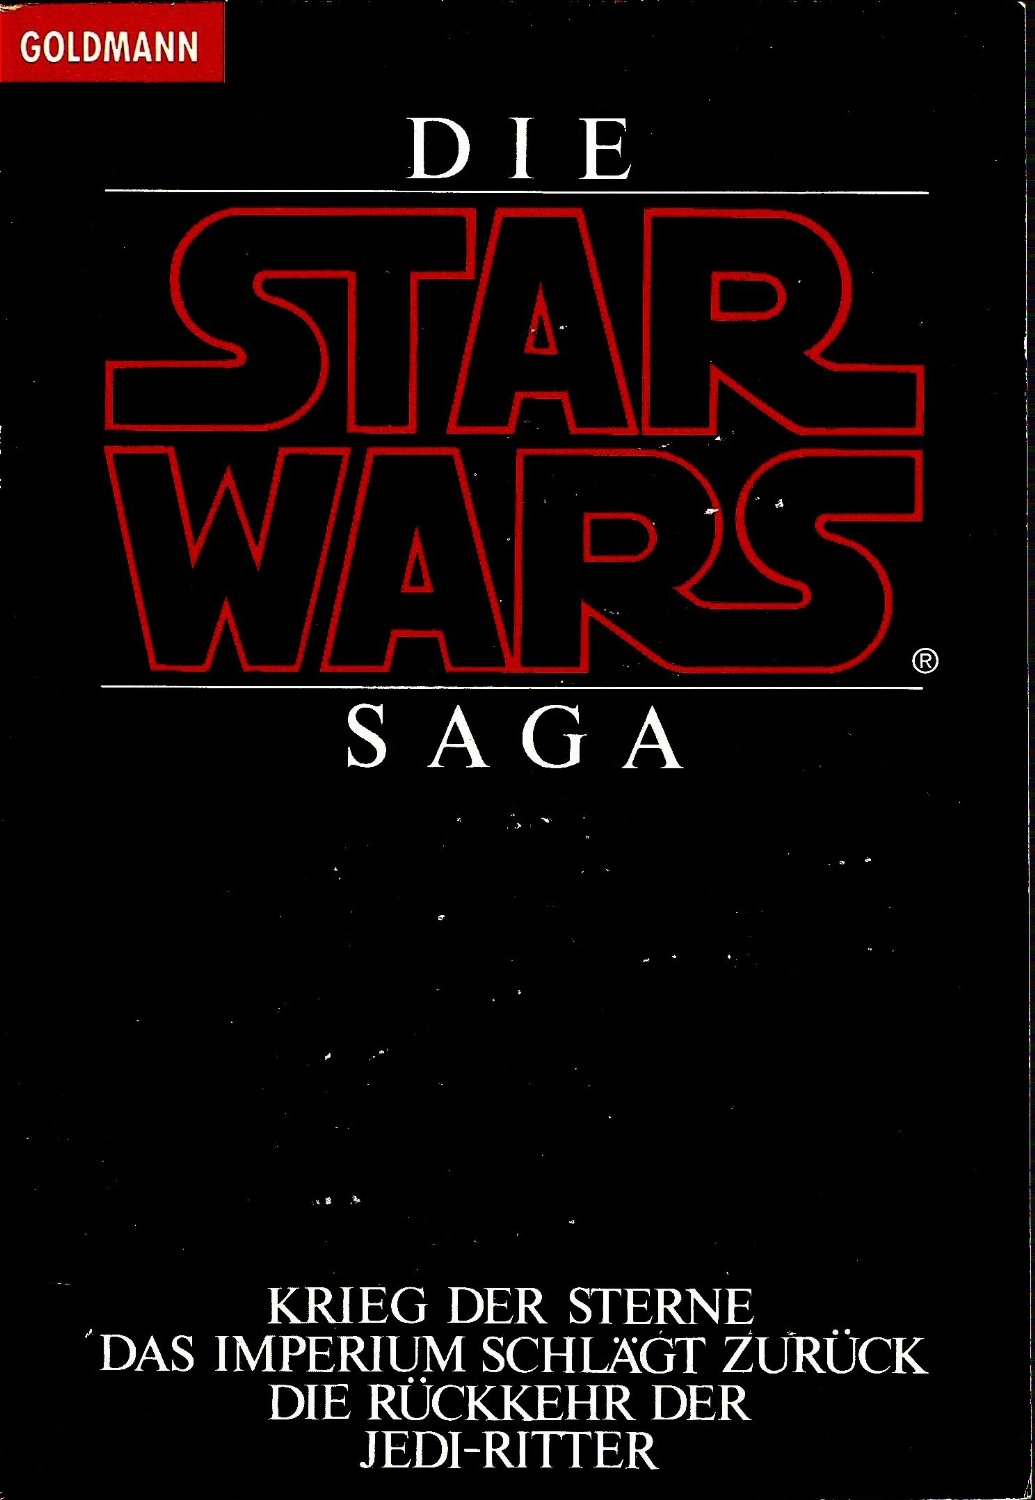 Die Star Wars Saga (Buch) | Jedipedia | Fandom